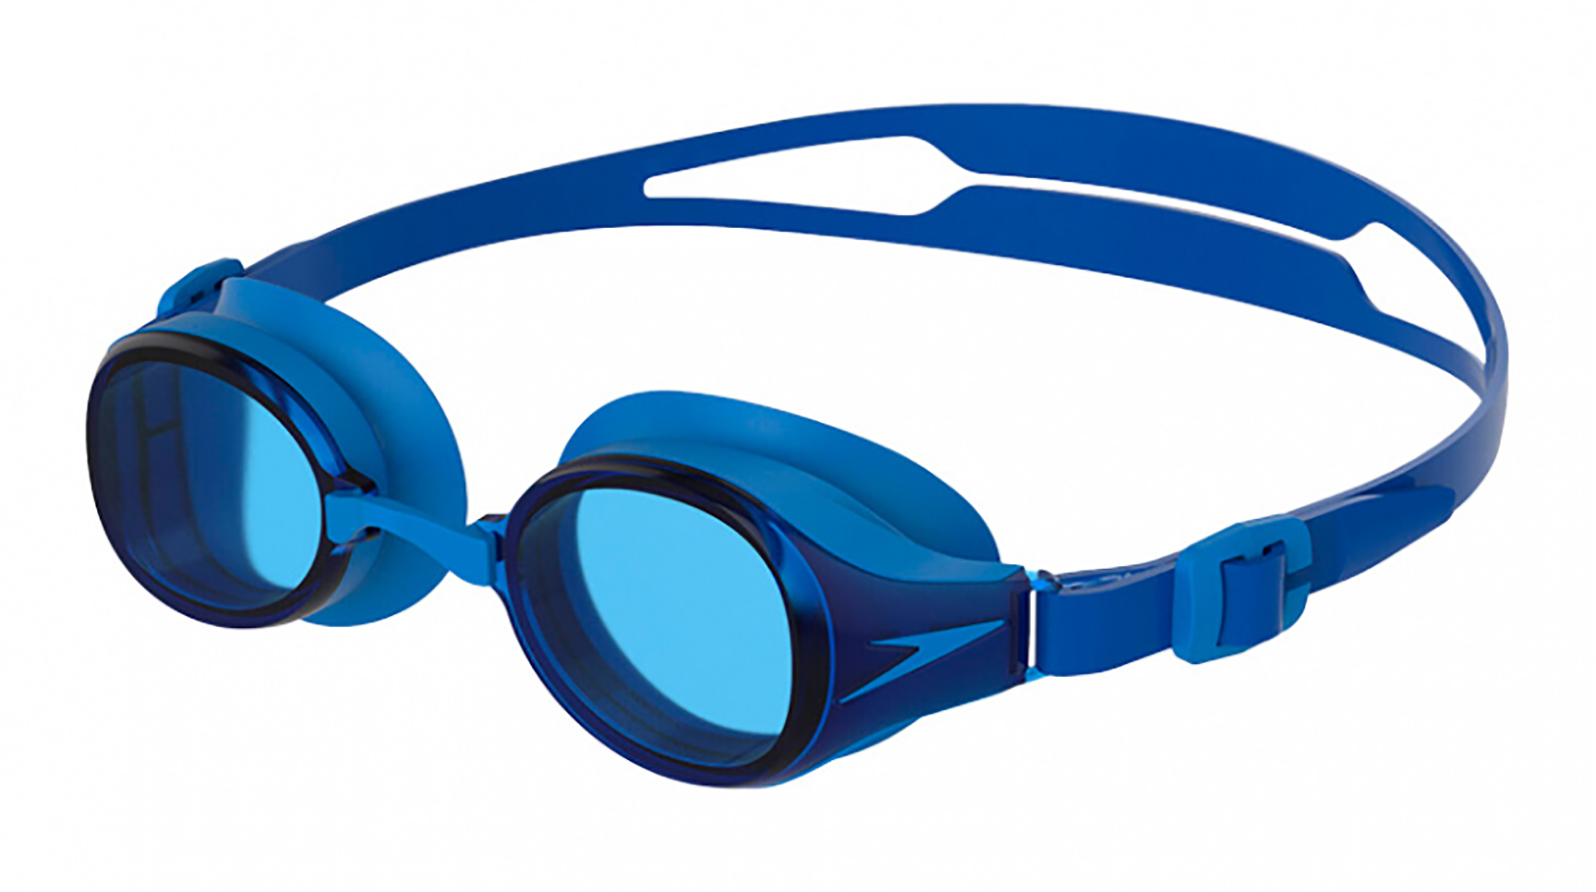 Speedo Очки для плавания Hydropure Optical F809 -5.0 speedo очки для плавания hydropure optical f809 5 0